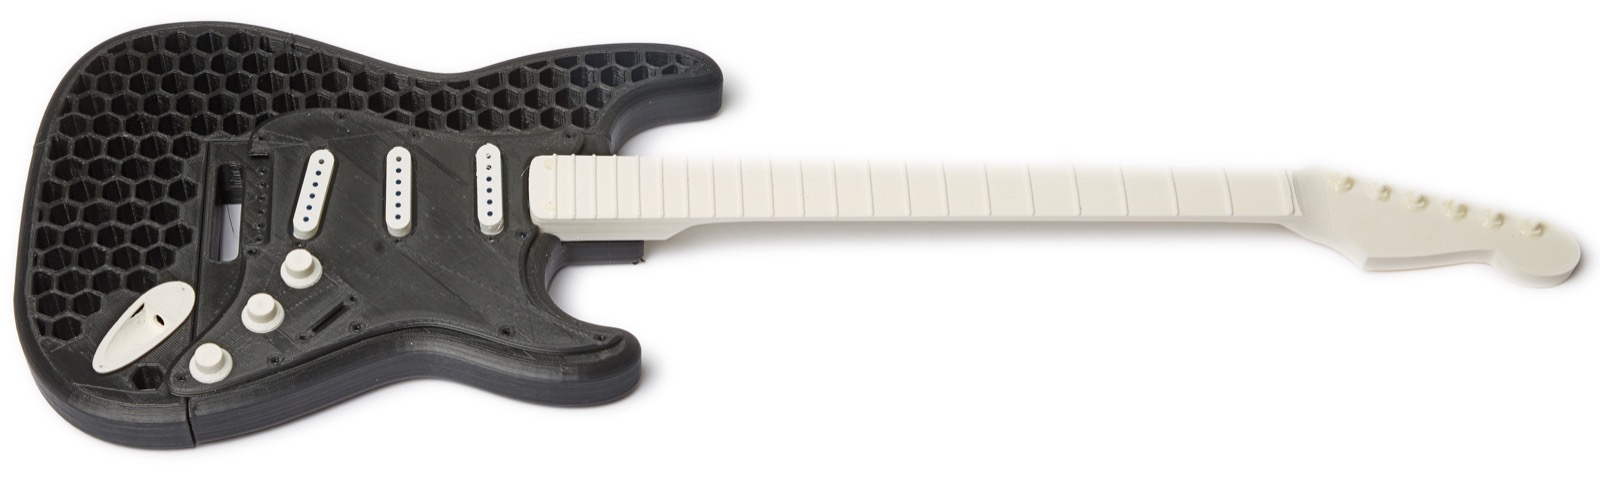 3D Printing a Guitar